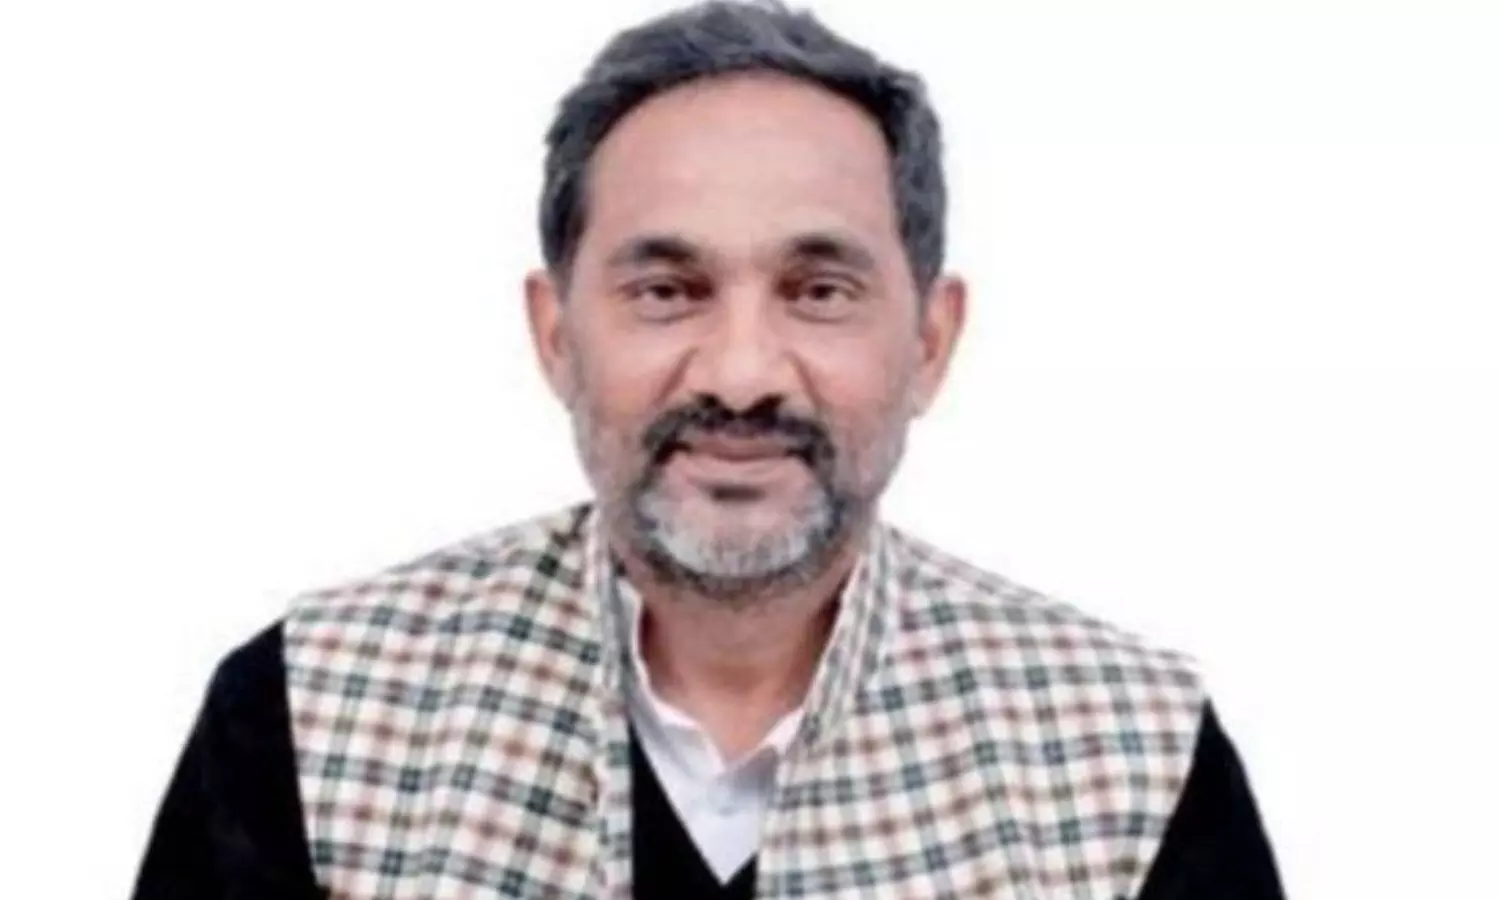 SP spokesperson Rajkumar Bhati